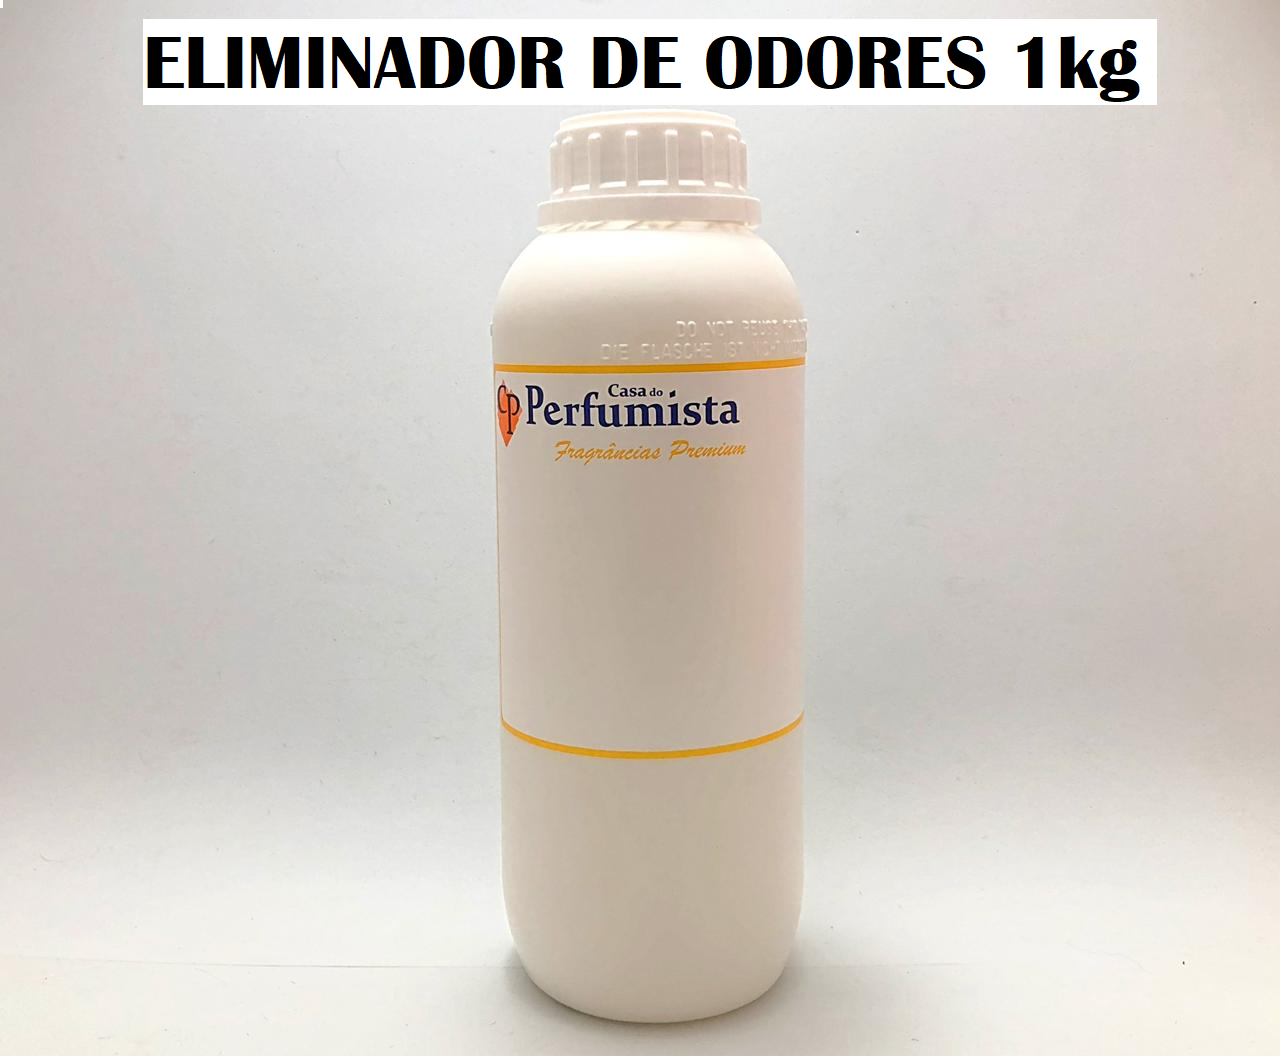 ELIMINADOR DE ODORES - 1kg